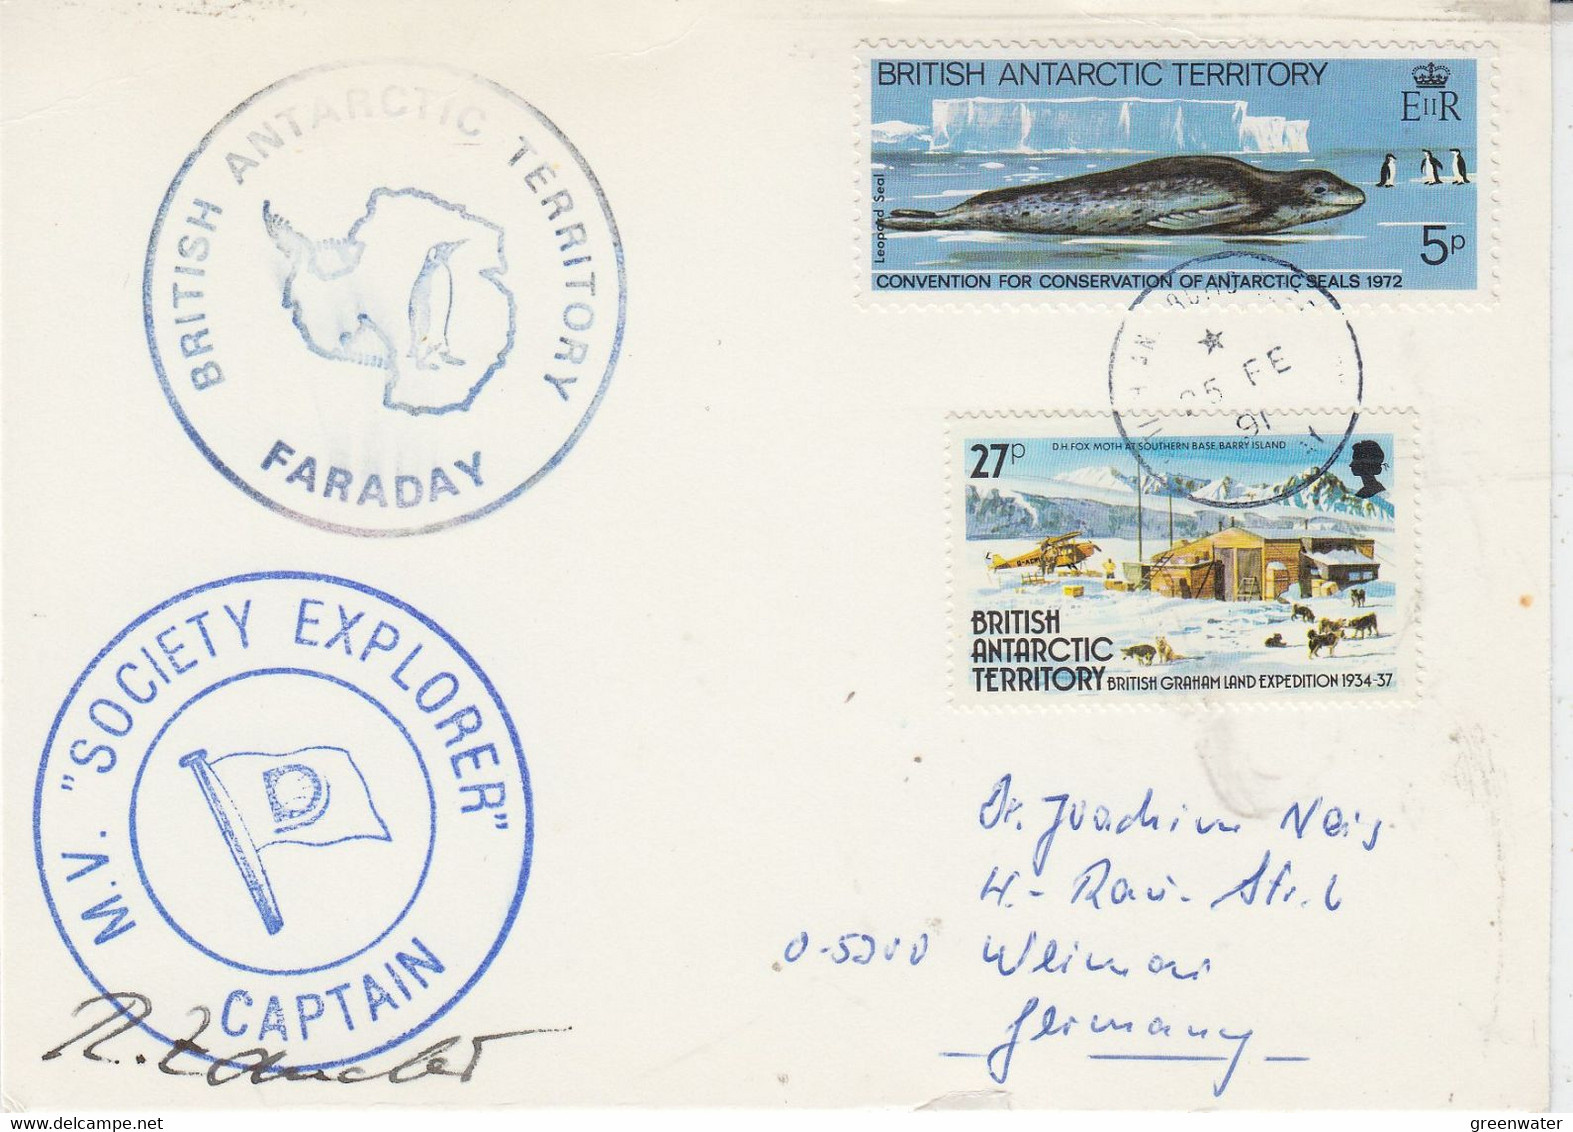 British Antarctic Territory (BAT) Ca MV Society Explorer Ca Captain Card  Ca Faraday 25 FE 1991 (AT174) - Briefe U. Dokumente